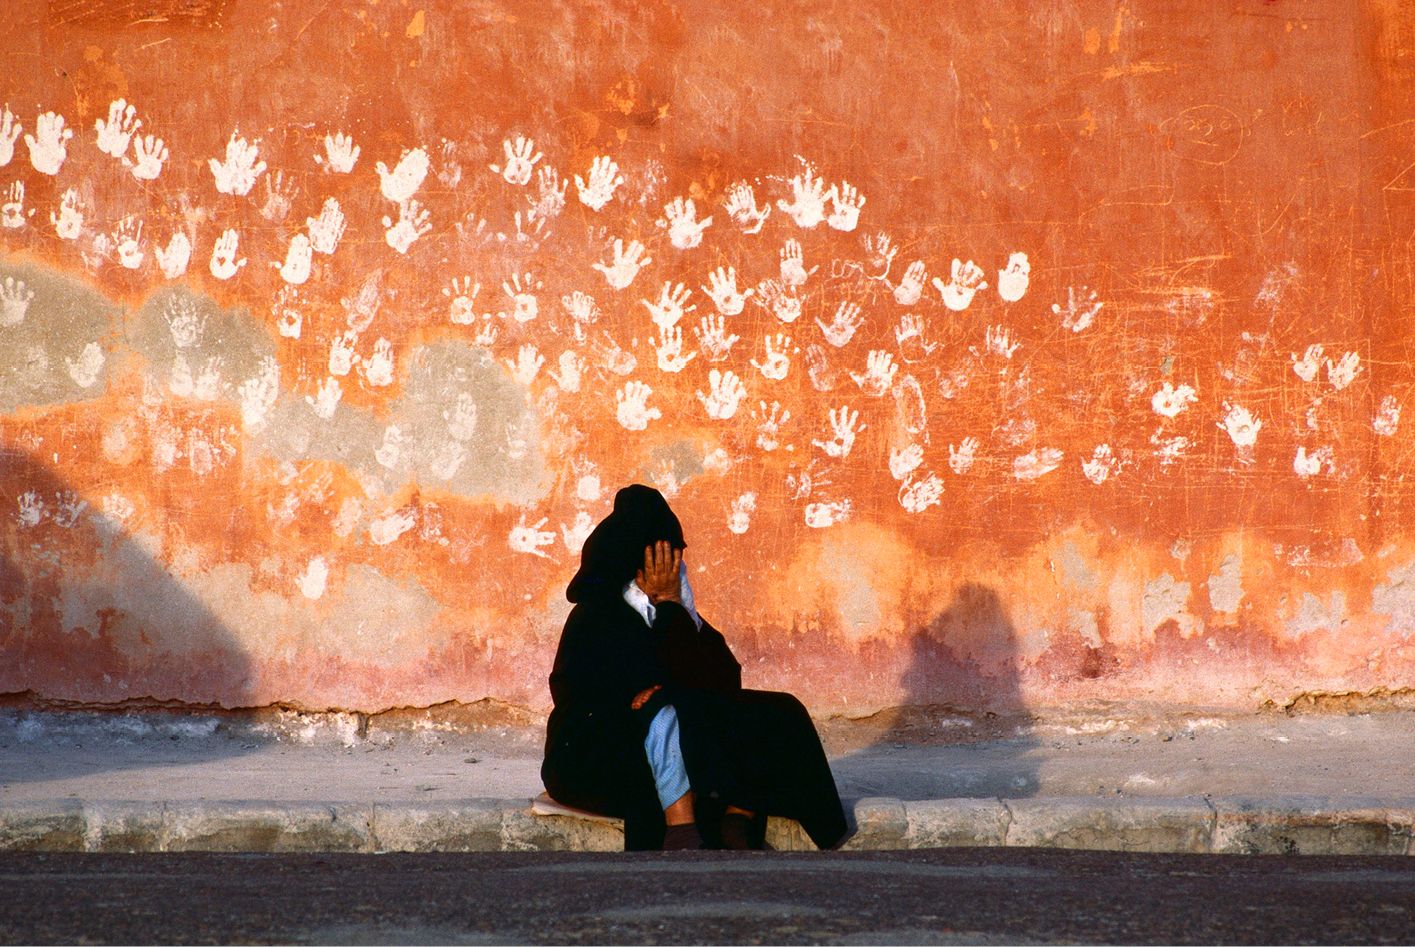 Essaouira, Morocco,1985, by Bruno Barbey